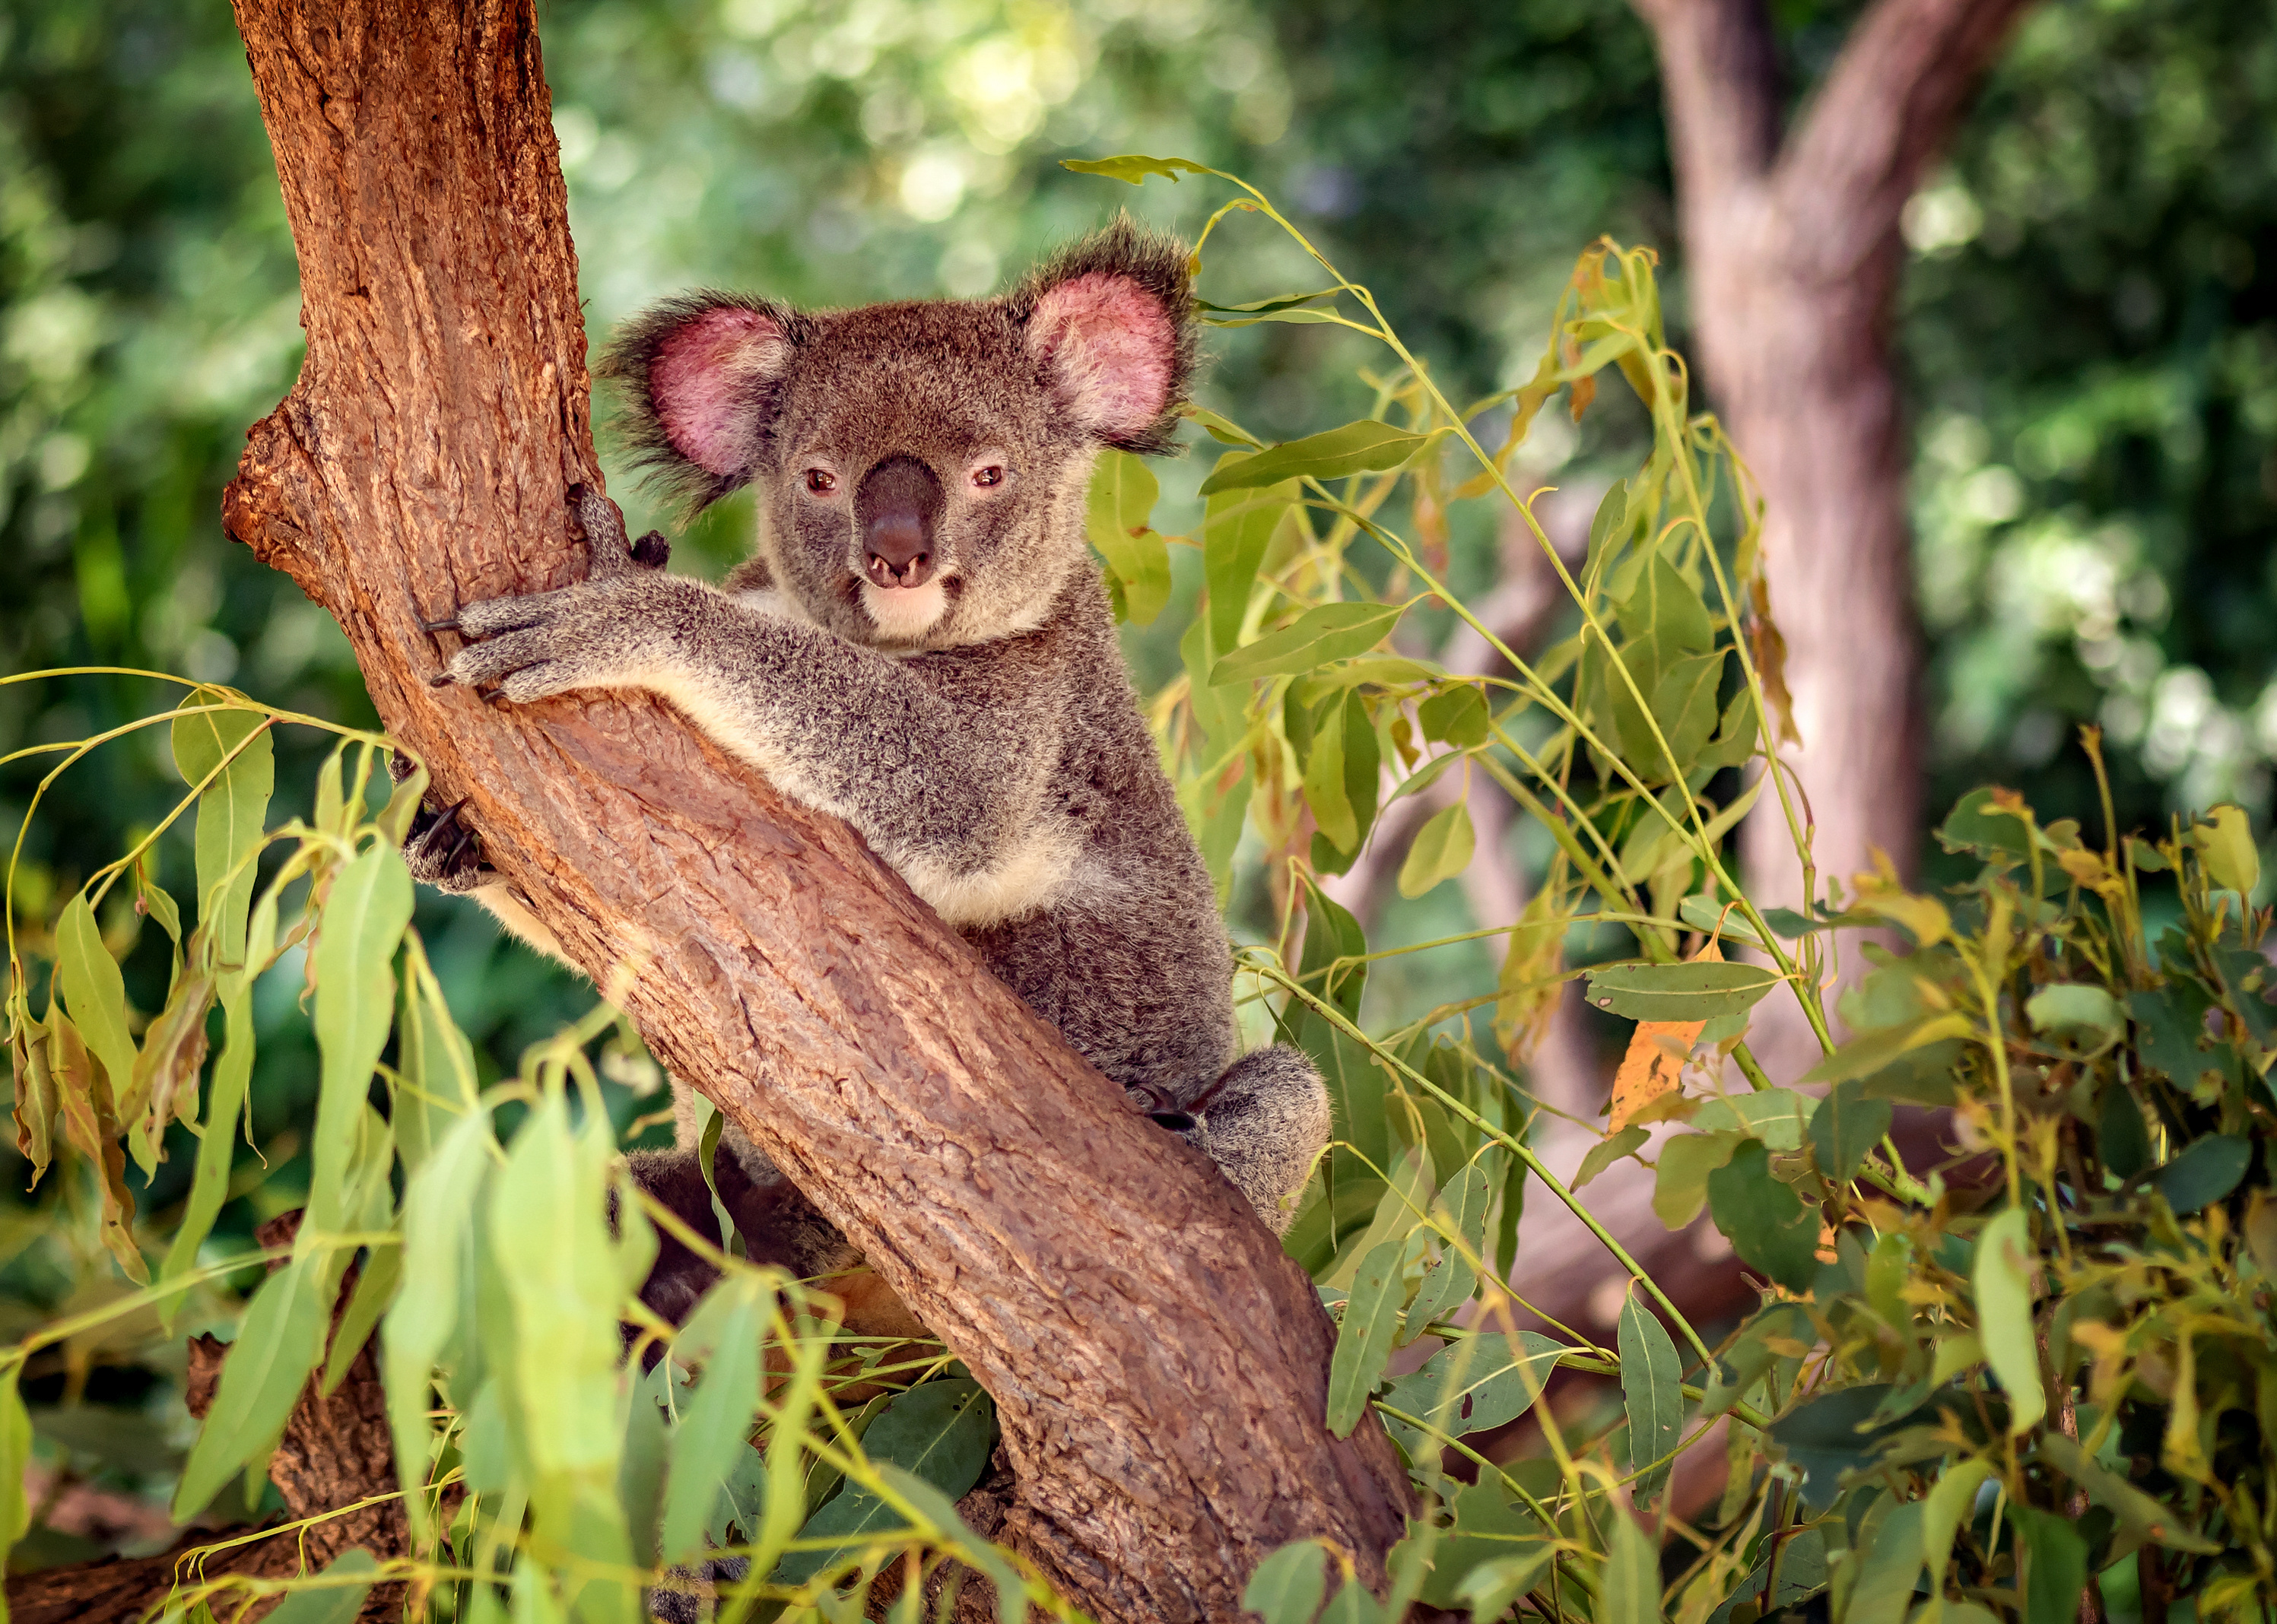 Where to Travel Based on Your Zodiac Sign - Koala in Queensland Australia